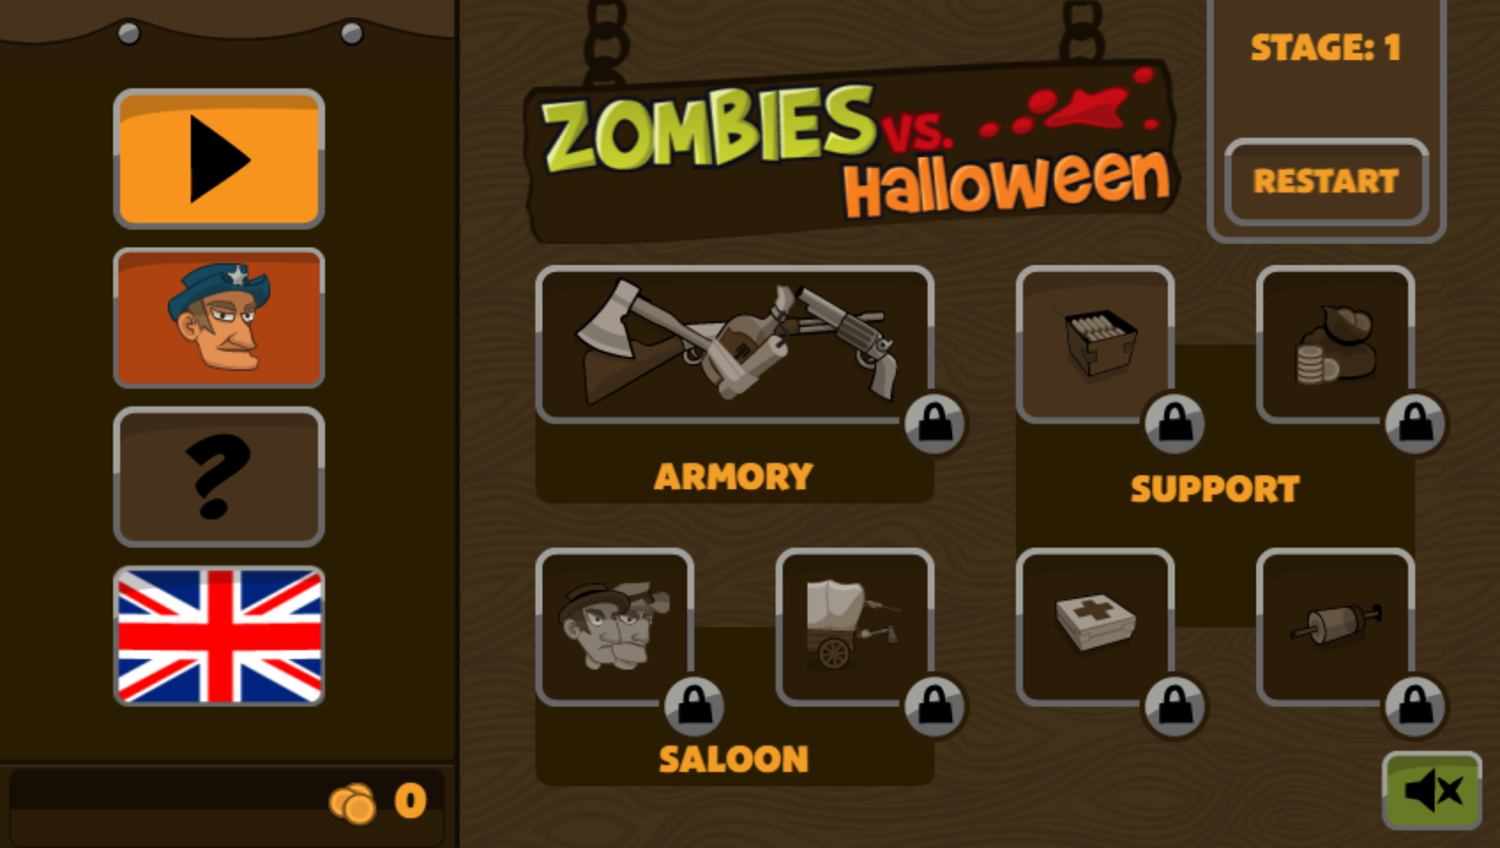 Zombies vs Halloween Game Welcome Screen Screenshot.